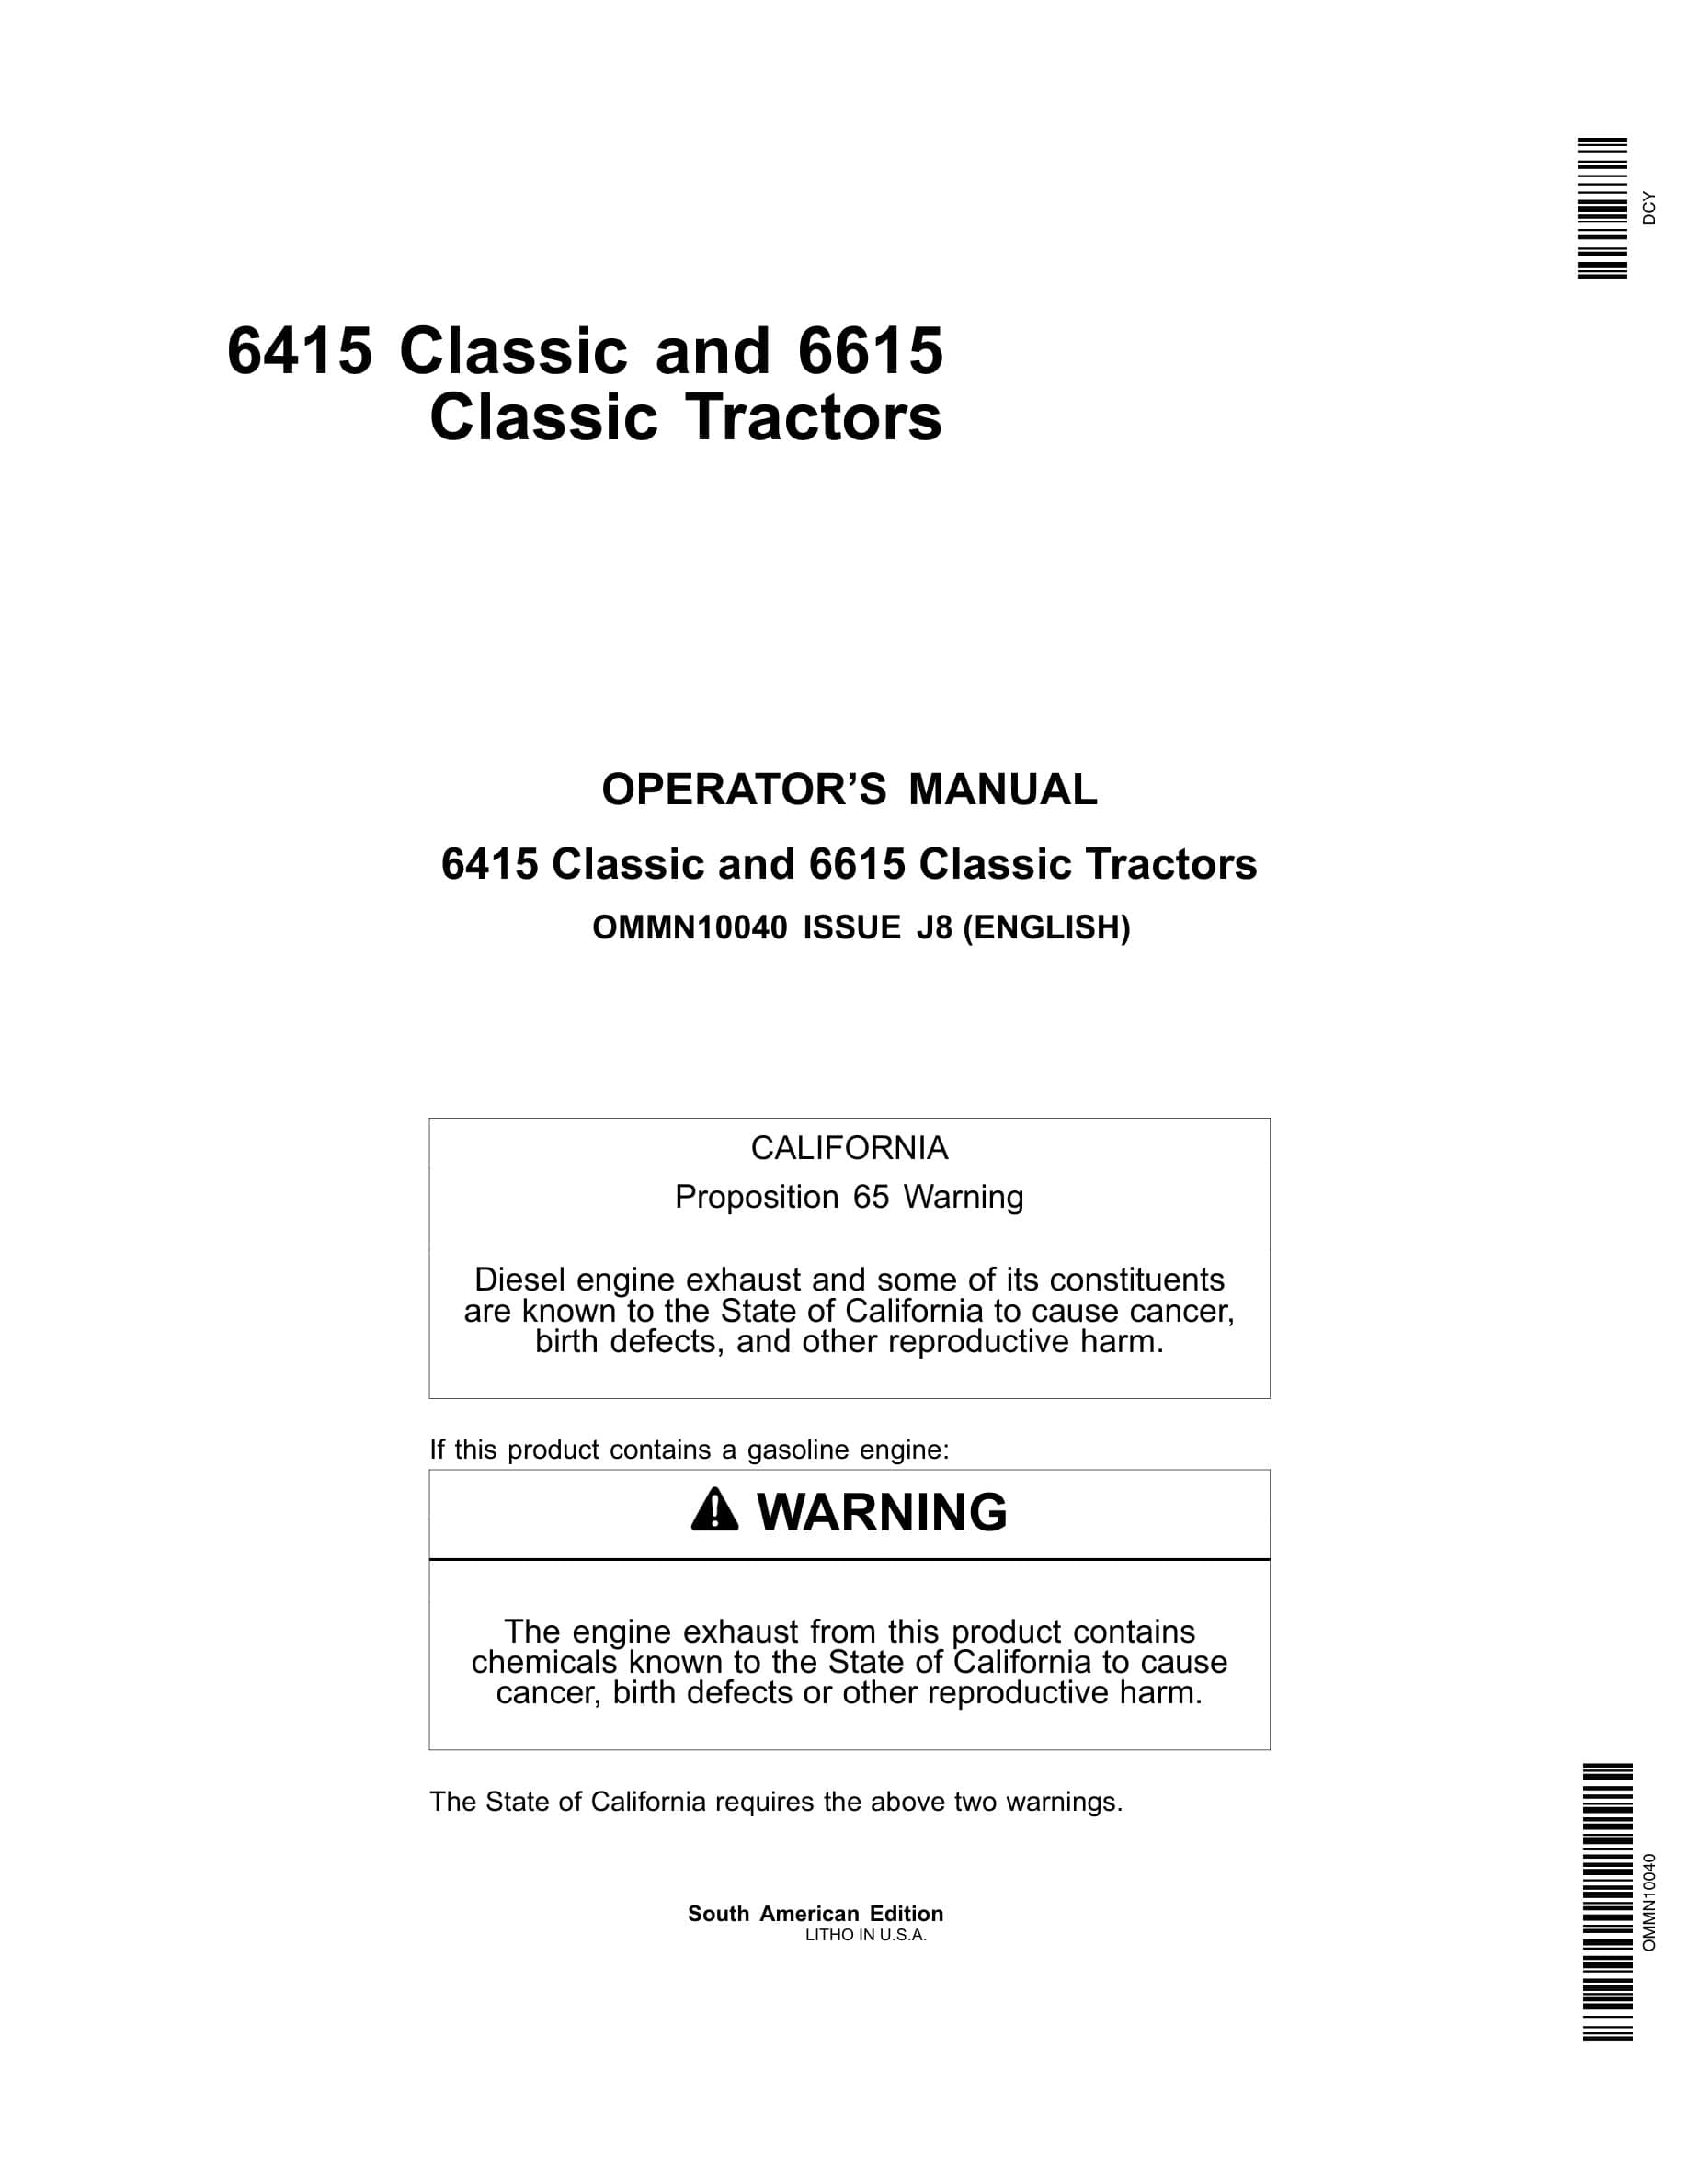 John Deere 6415 6615 Classic Tractors Operator Manuals OMMn10040-1